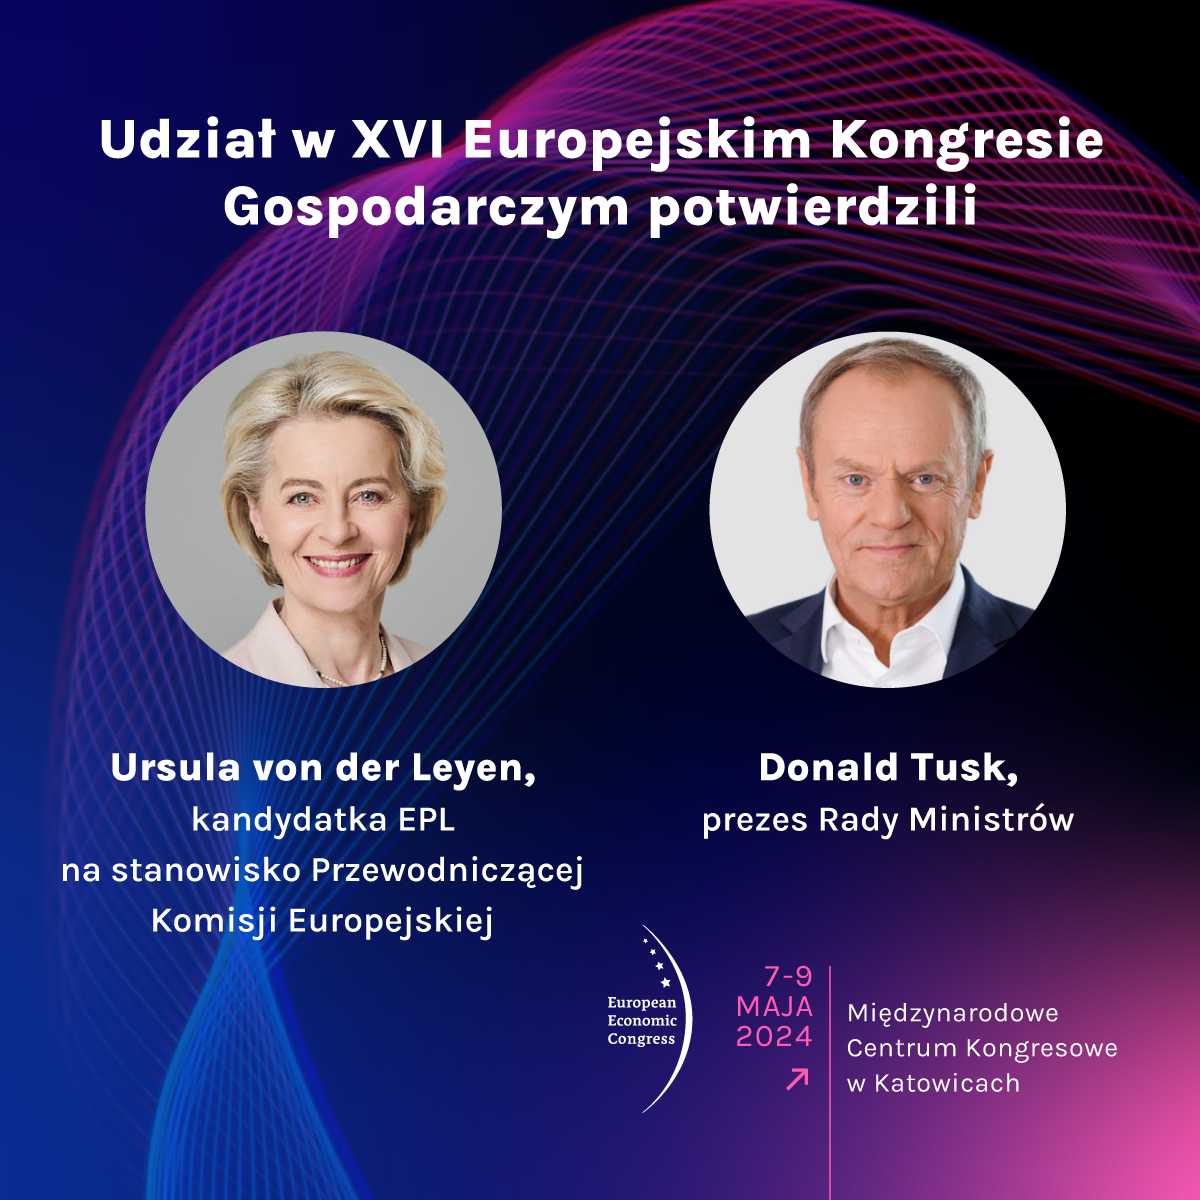 Ursula von der Leyen oraz Donald Tusk gośćmi XVI EKG w Katowicach